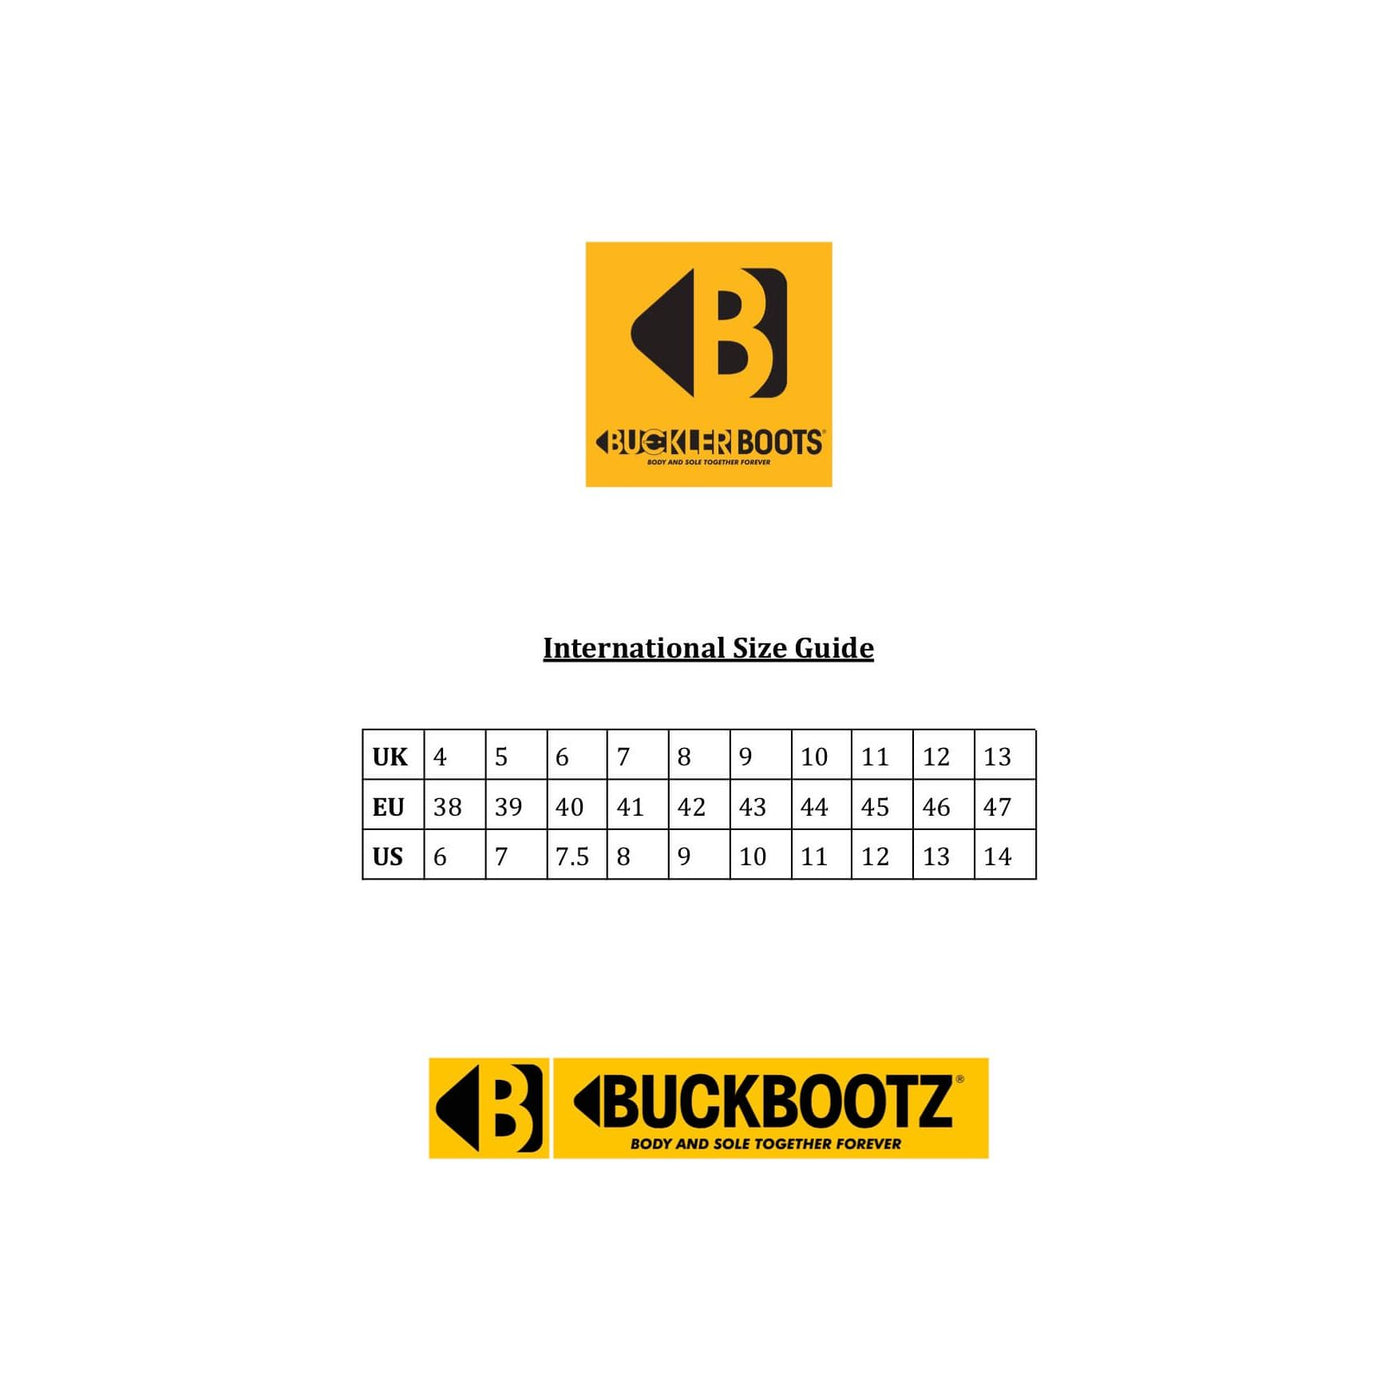 Buckbootz B750 Safety Boots Goodyear Welted Waterproof Buckler Boots